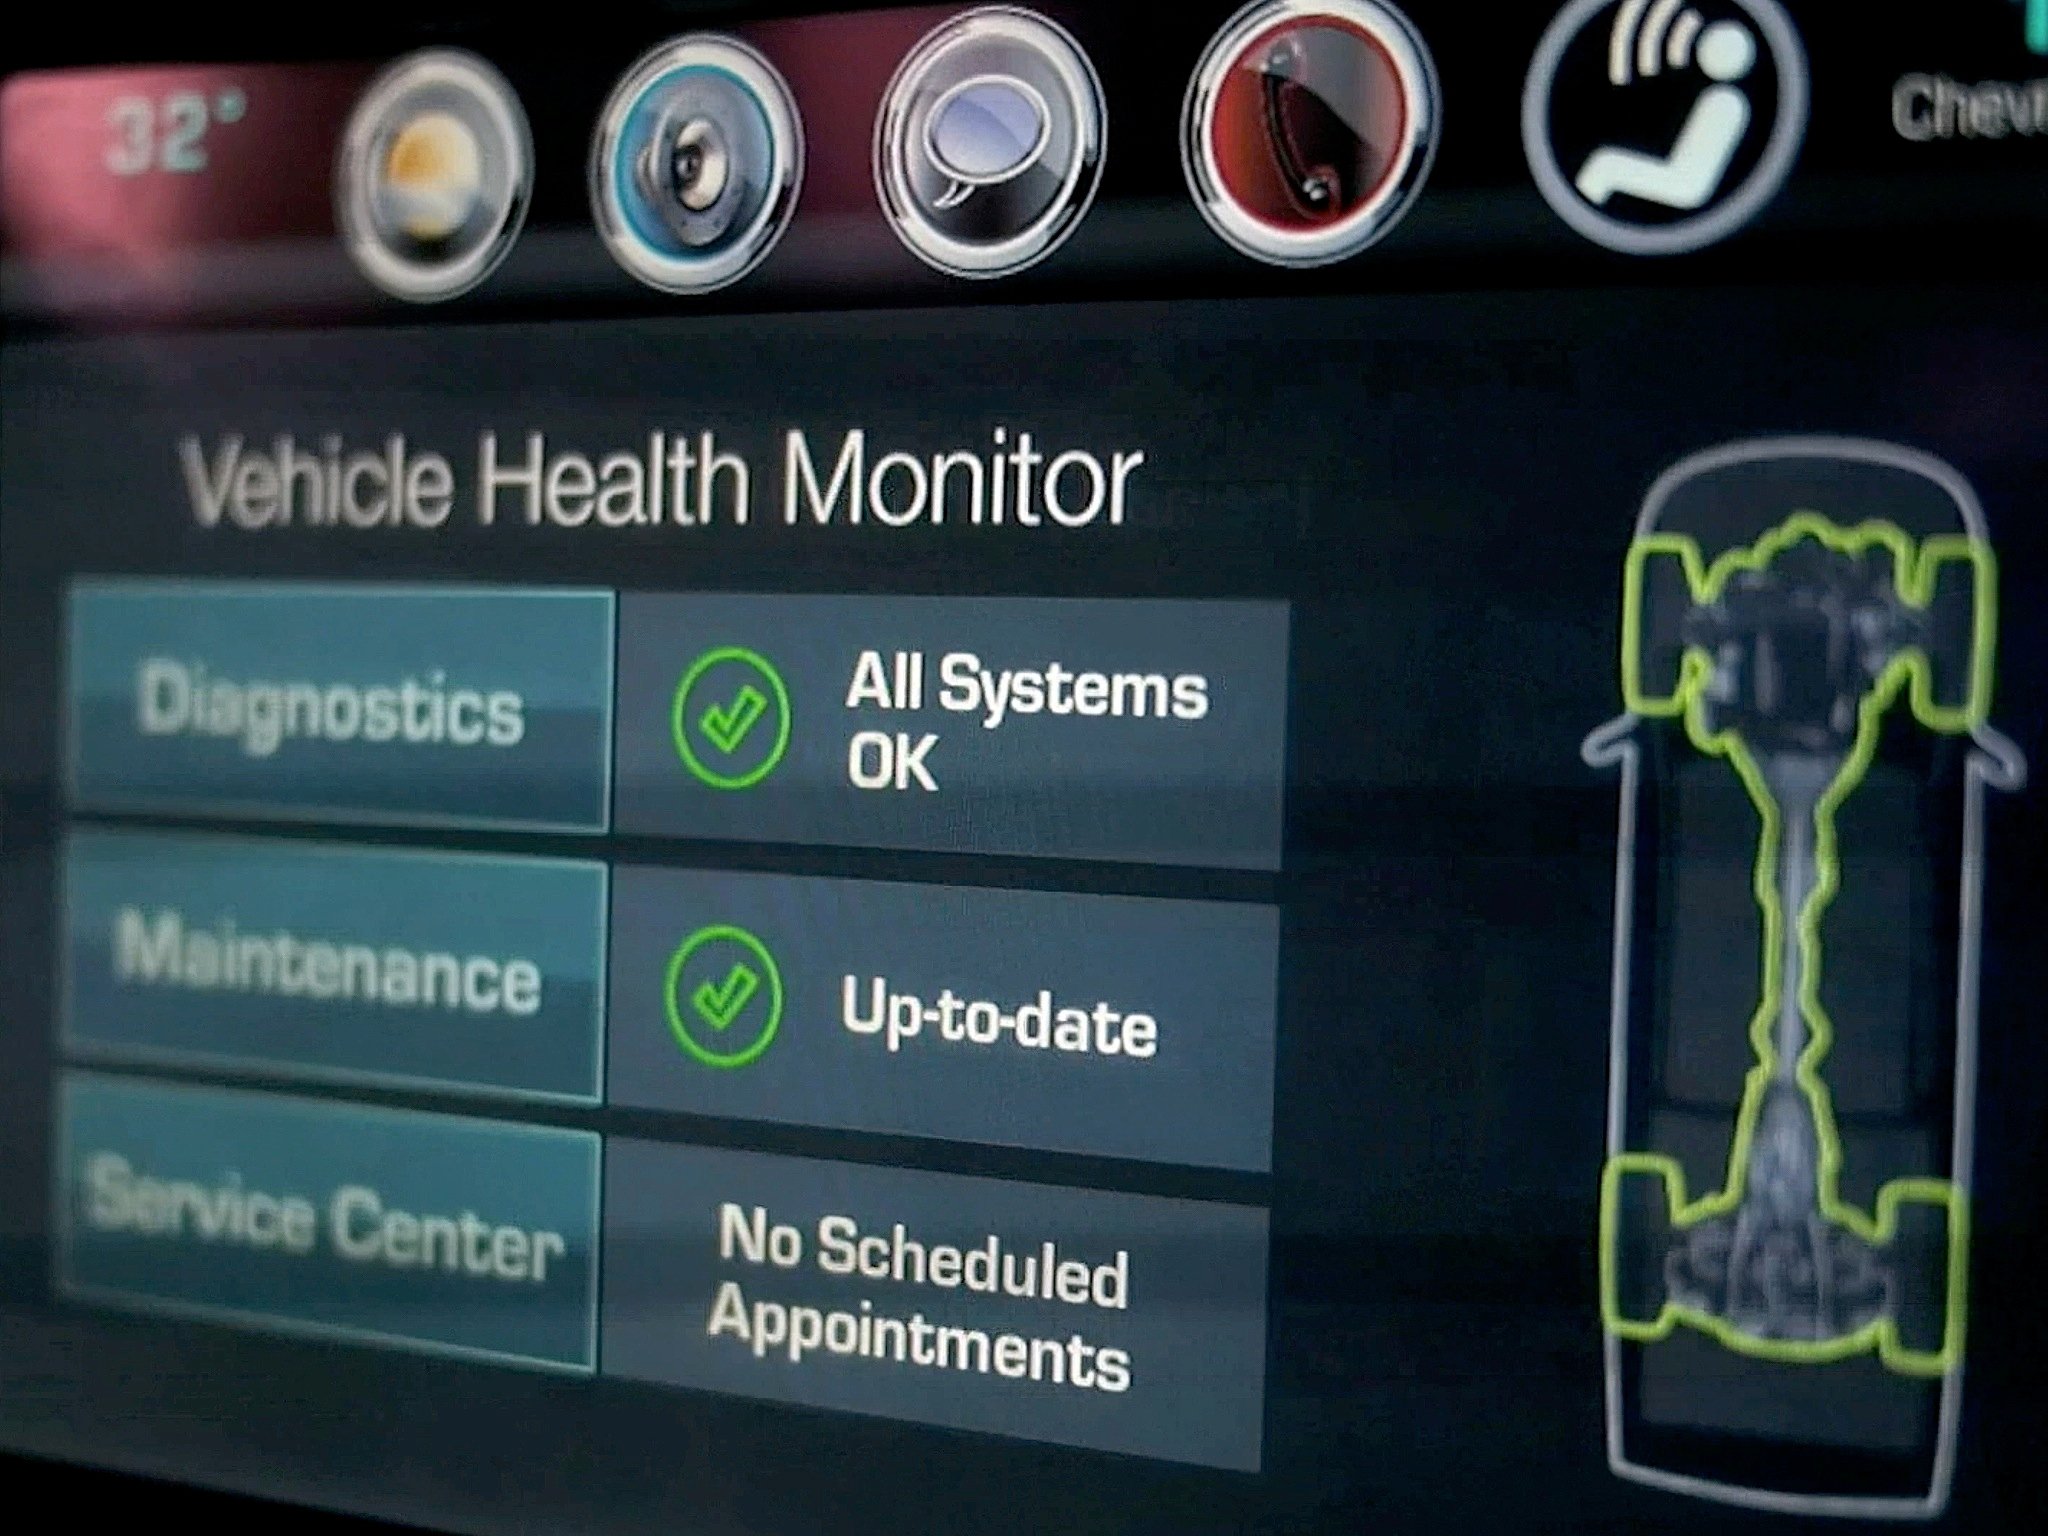 Chevy AppShop Vehicle Health